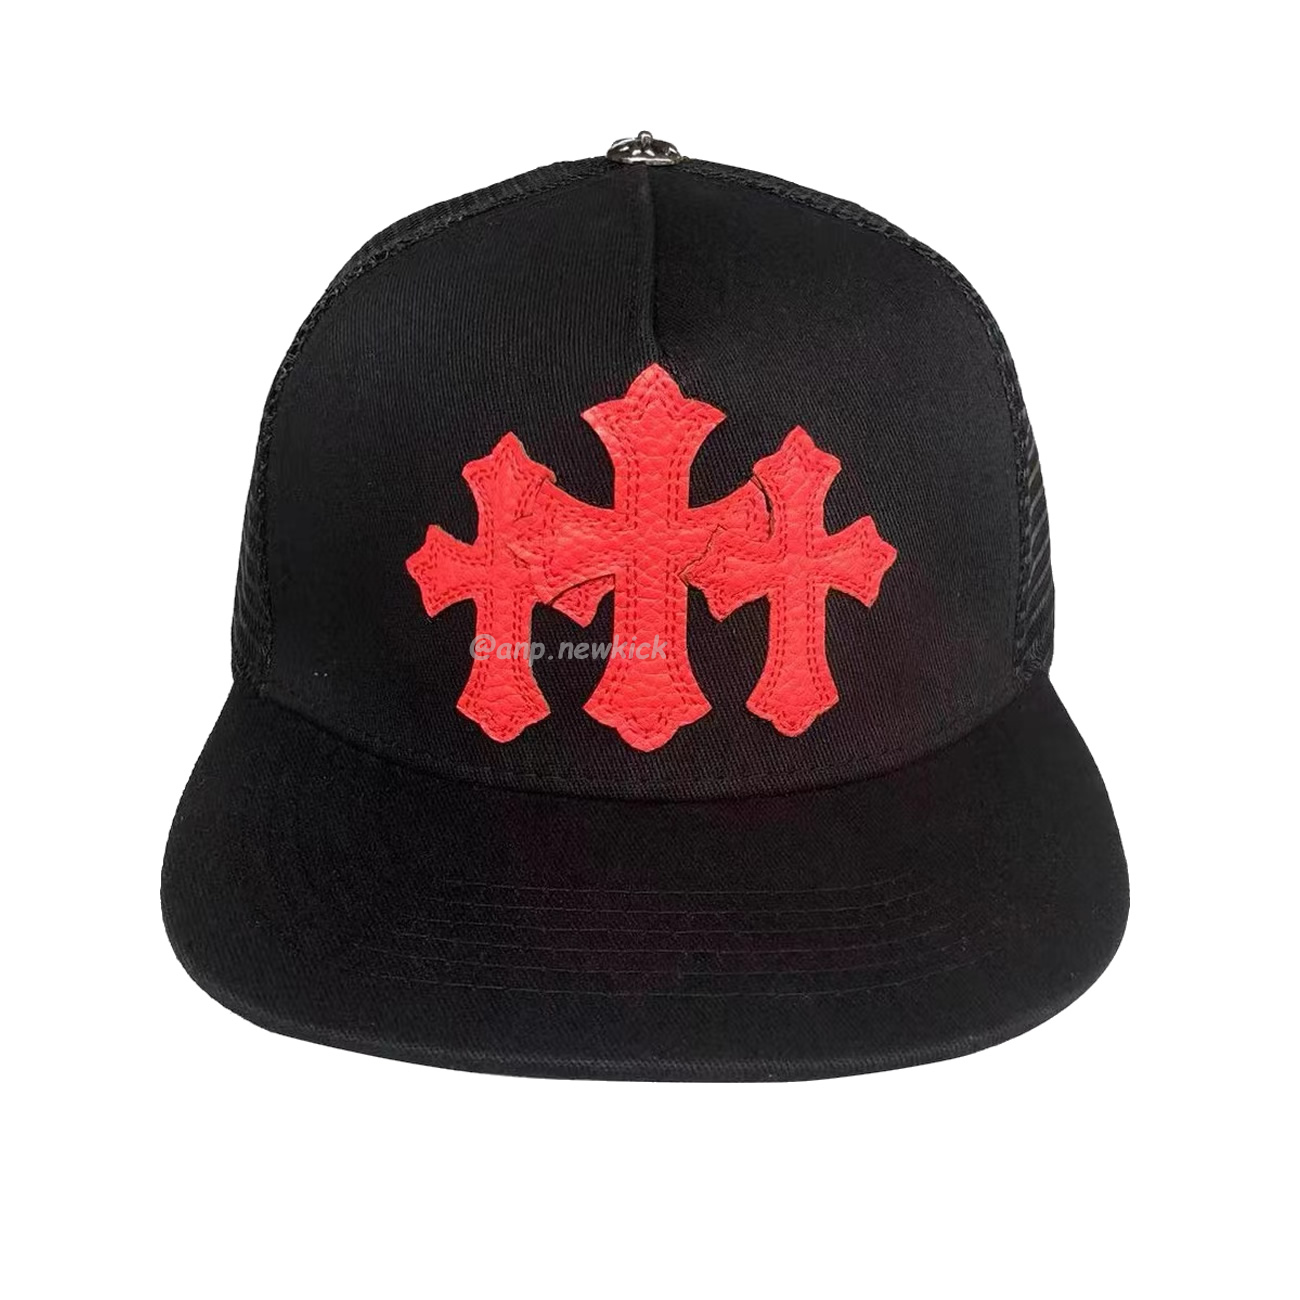 Chrome Hearts Tri Cross Black White Red Trucker Hat (3) - newkick.org